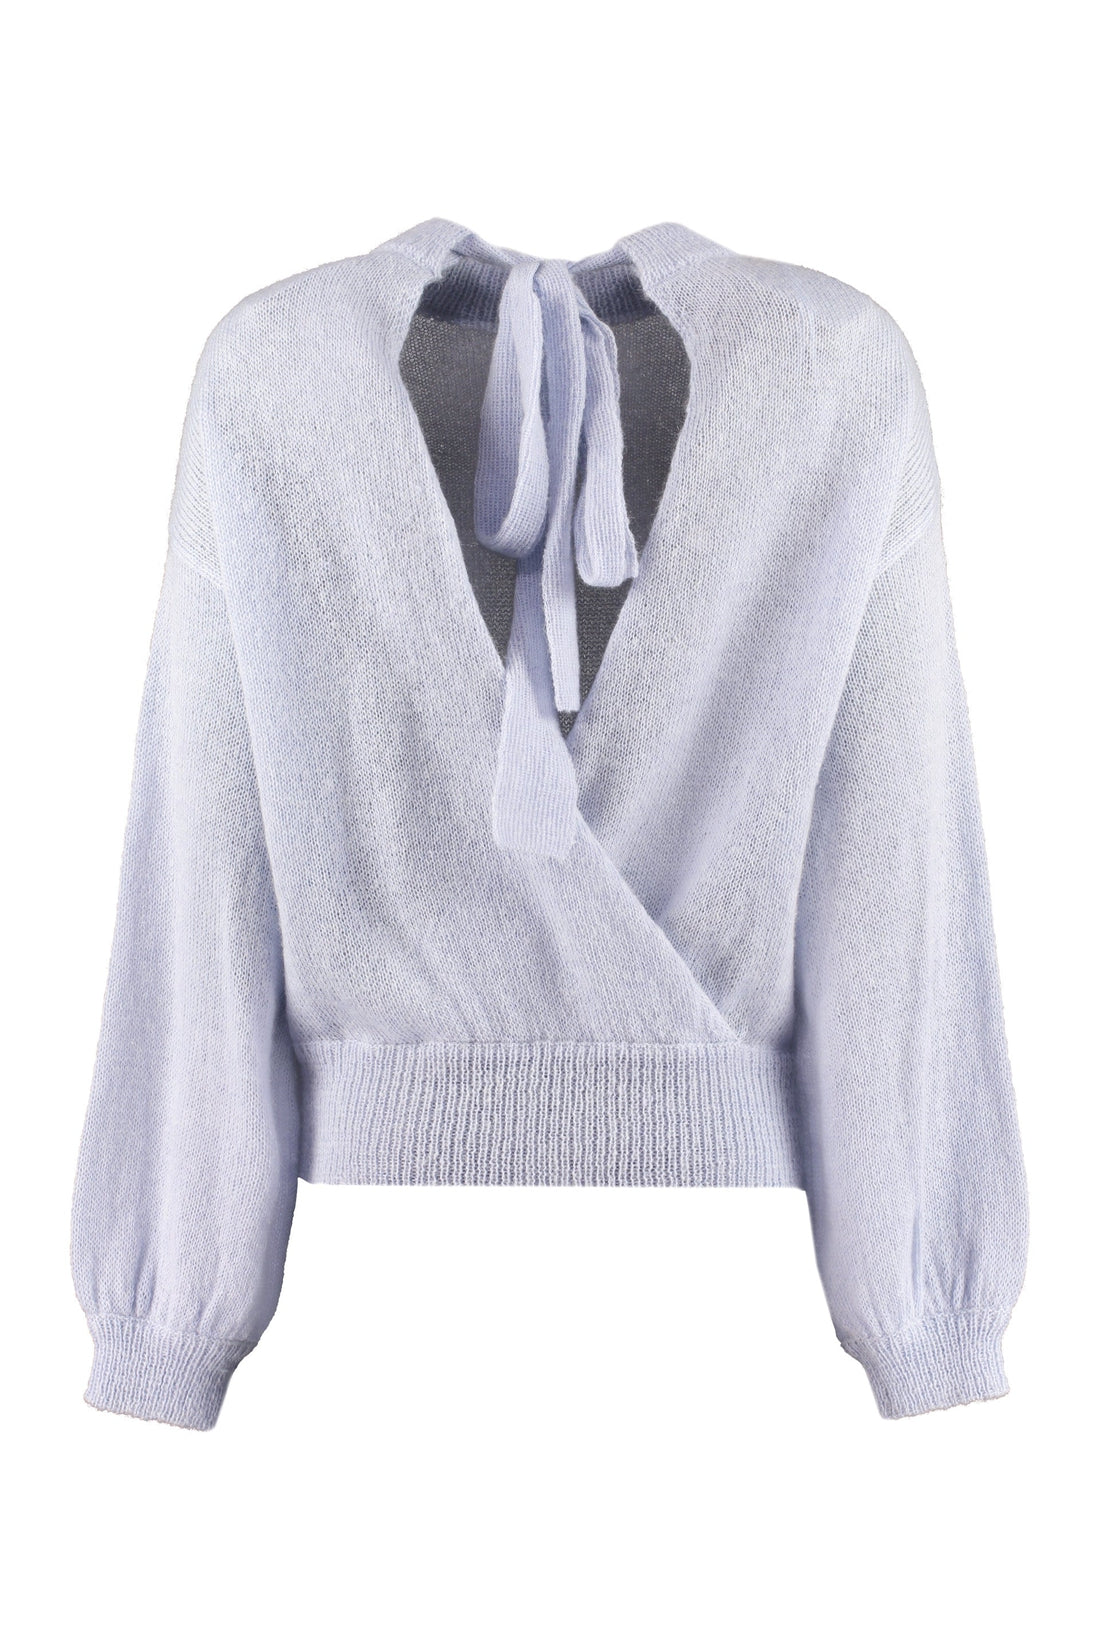 Pinko-OUTLET-SALE-Ecuador long sleeve sweater-ARCHIVIST